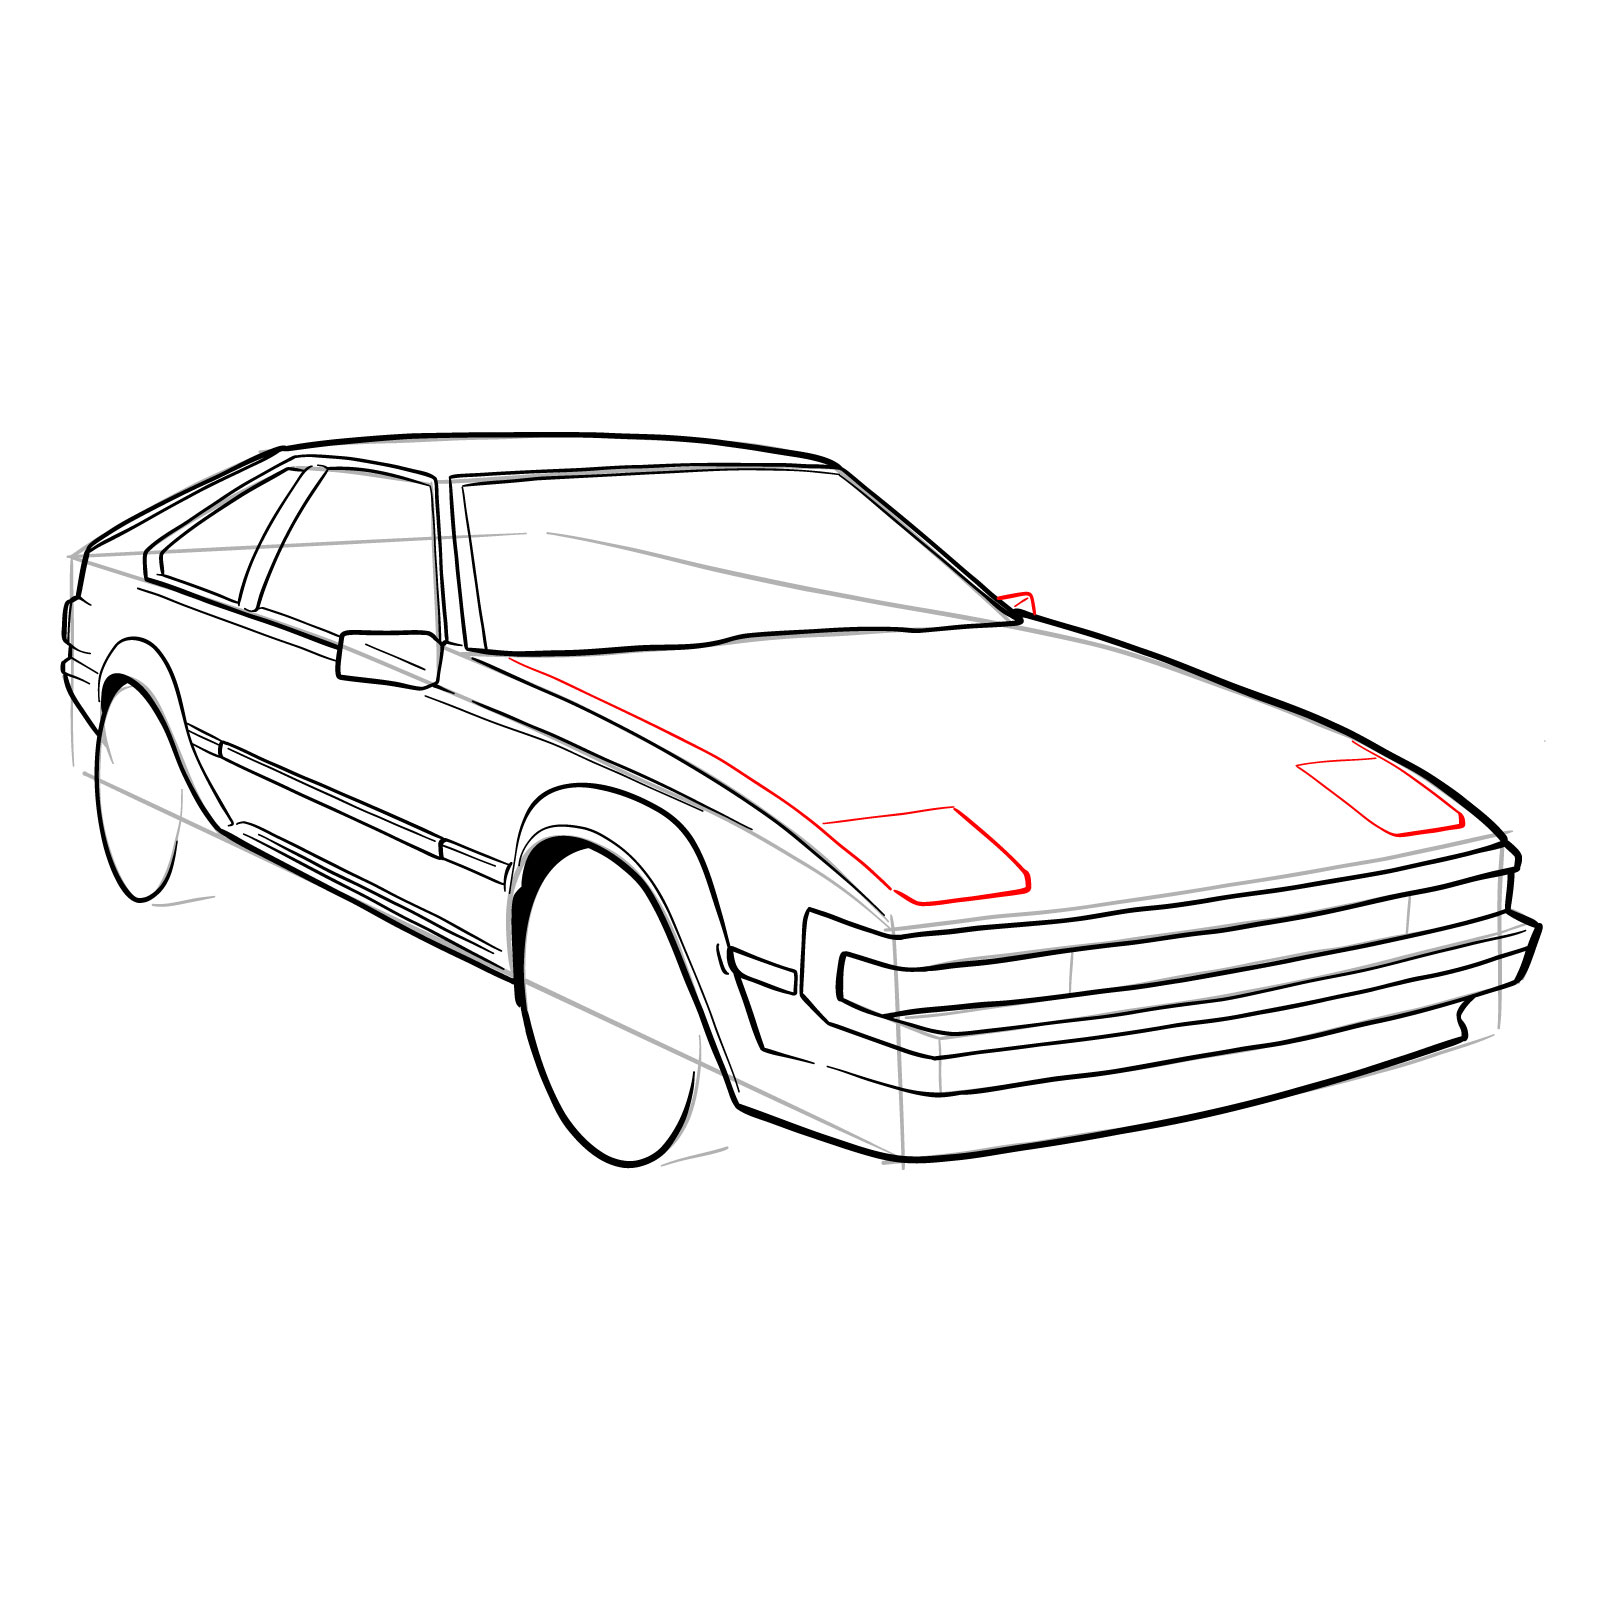 How to draw a 1985 Toyota Celica Supra P Type MK 2 - step 25